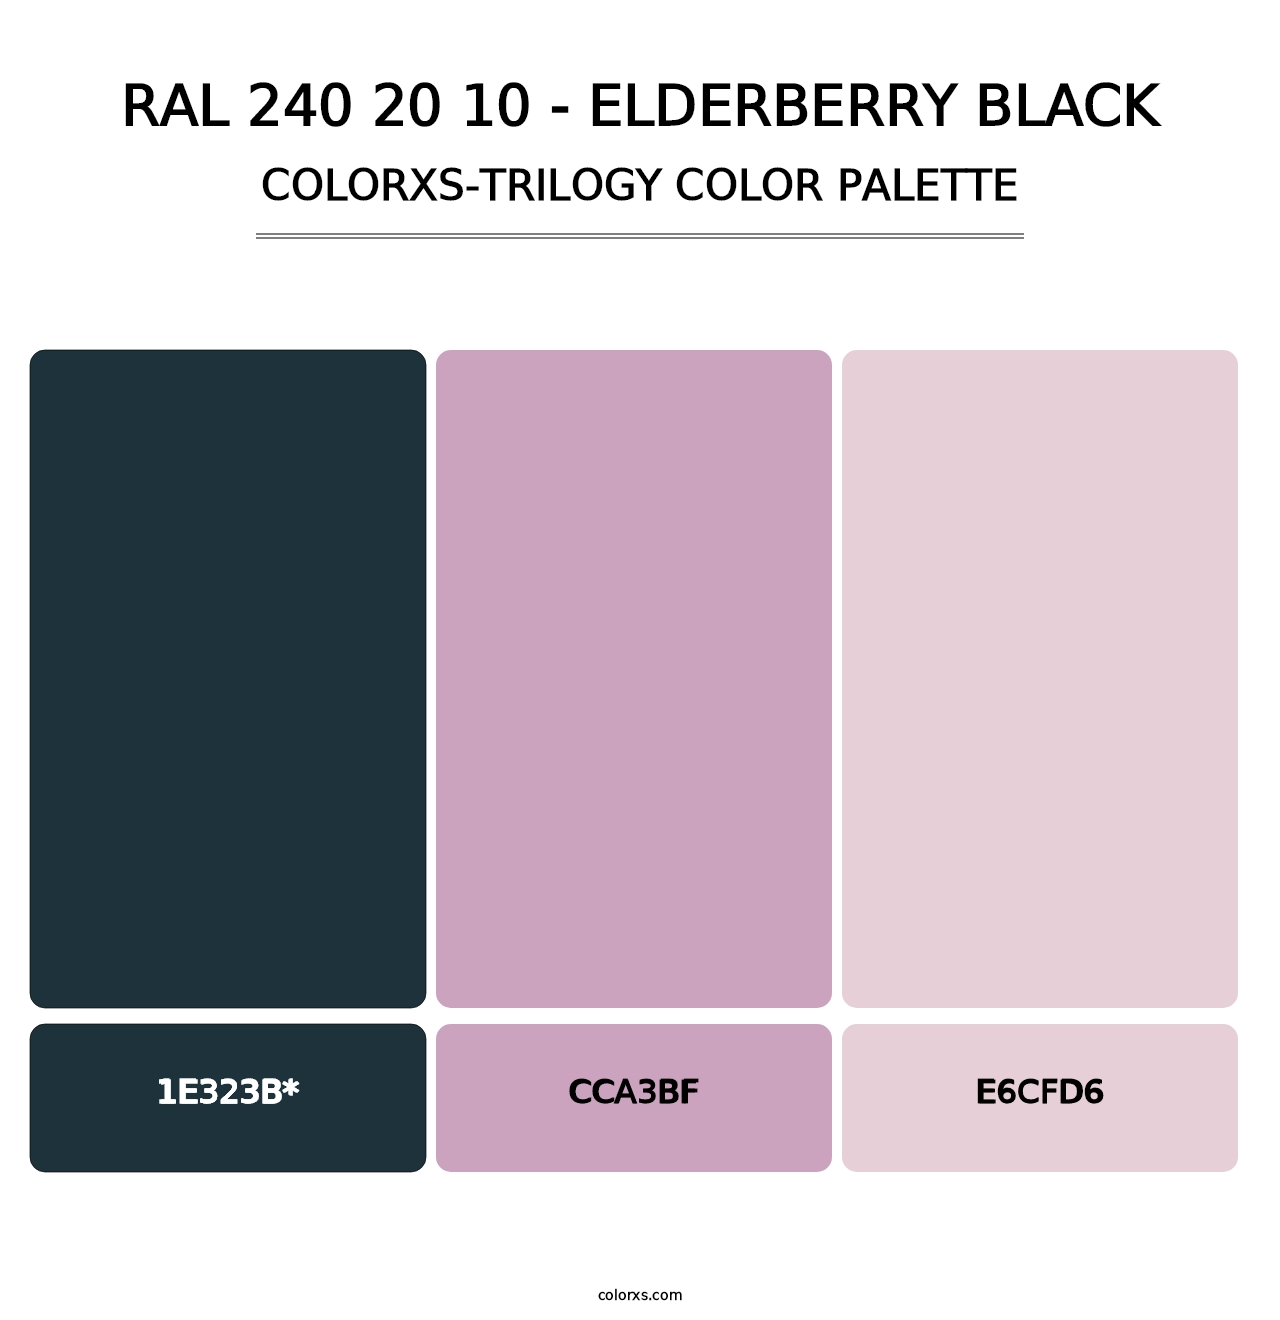 RAL 240 20 10 - Elderberry Black - Colorxs Trilogy Palette